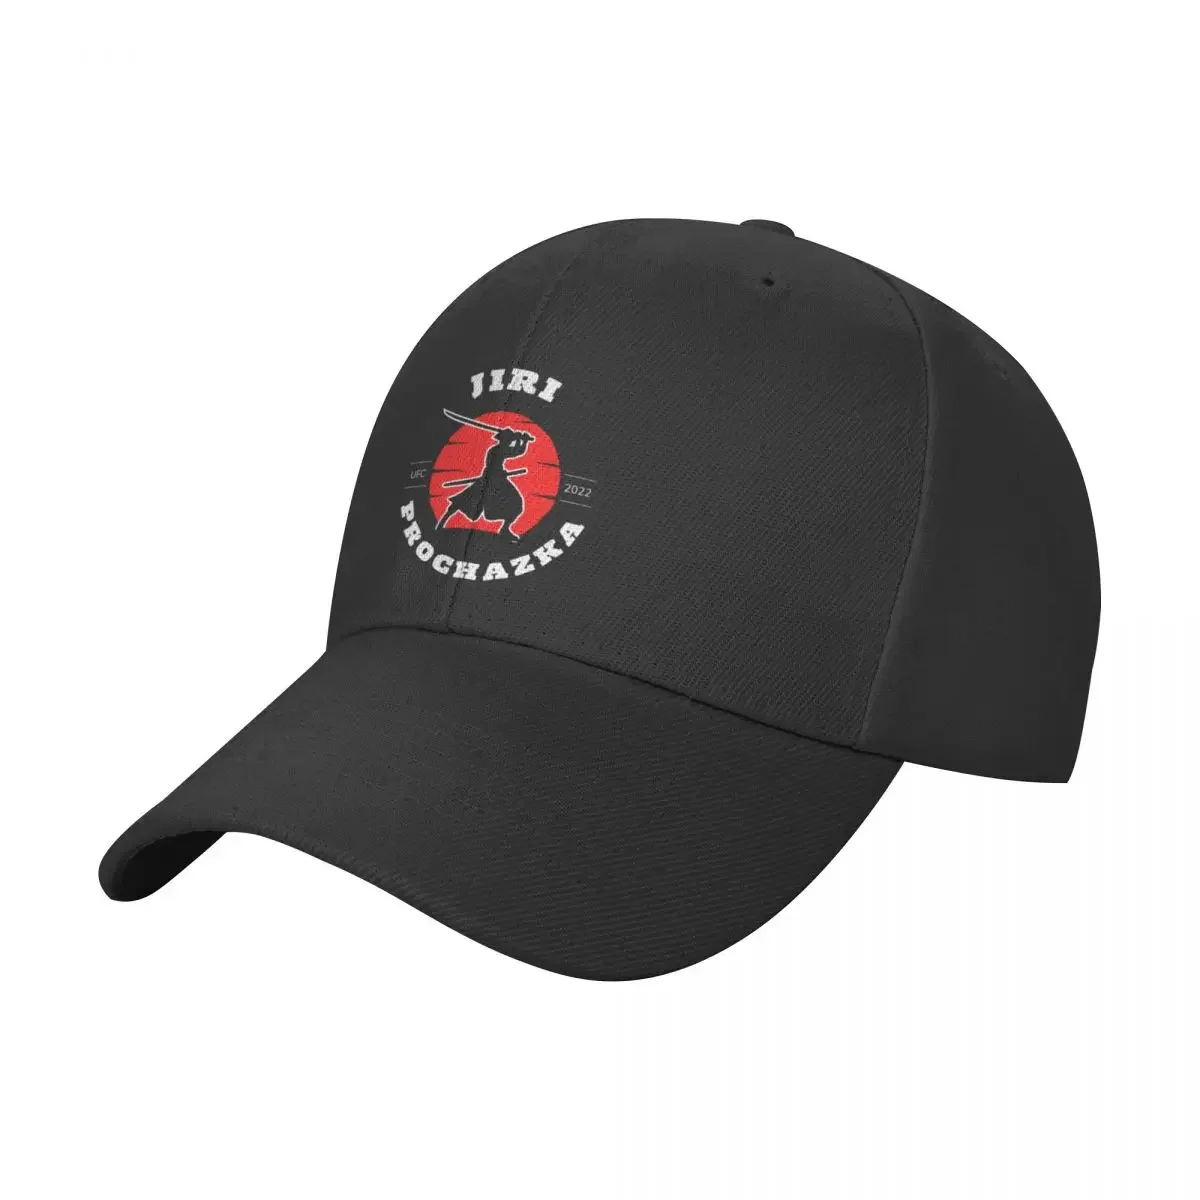 Jiri Denisa Prochazka Baseball Cap black Sun Hat For Children Beach Outing Golf Men Women's